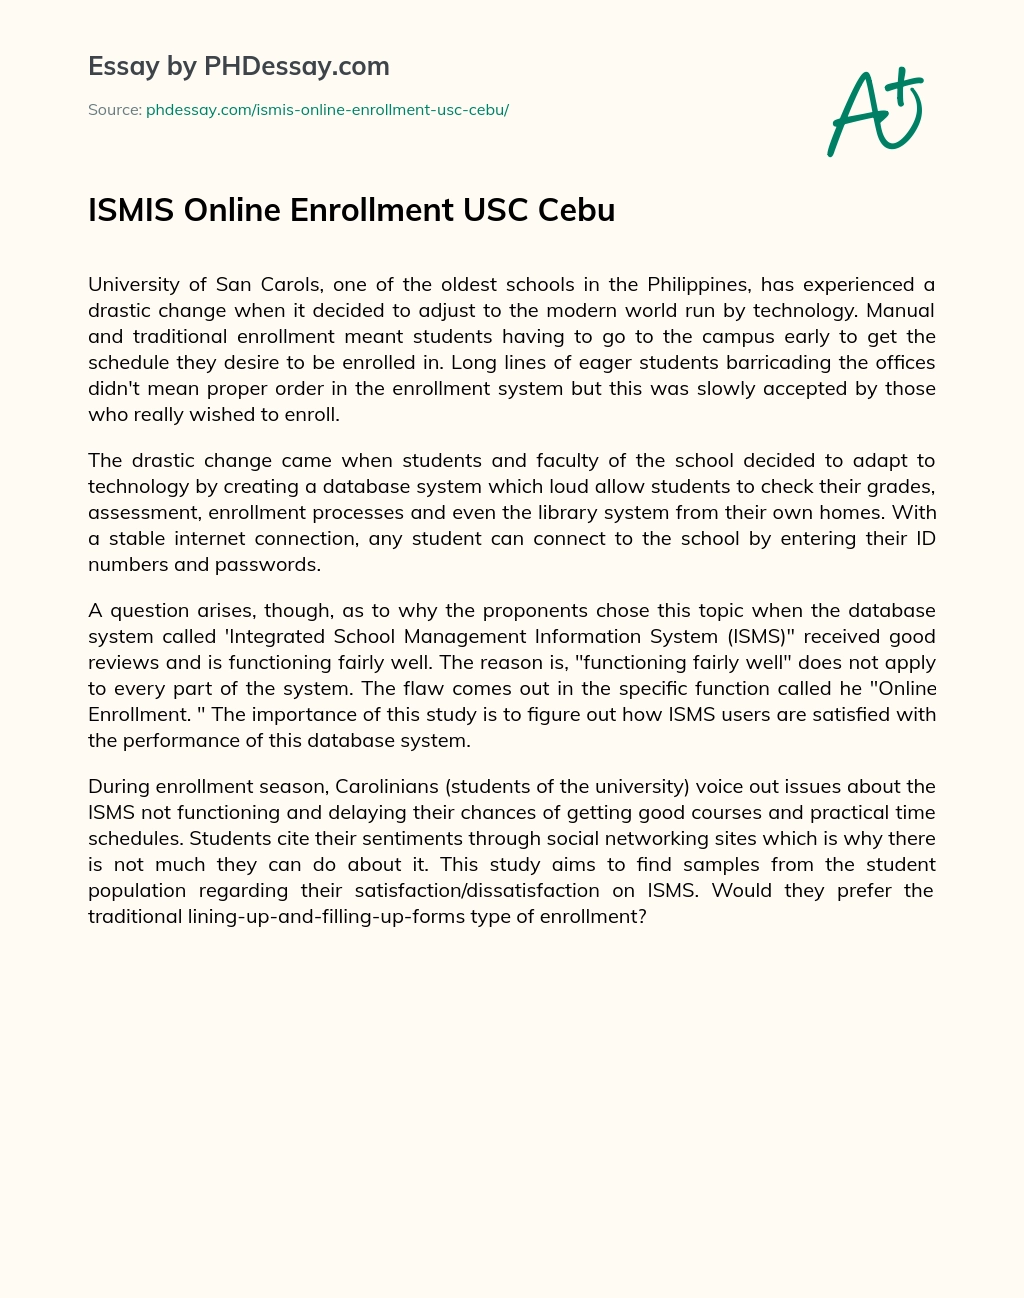 ISMIS Online Enrollment USC Cebu essay